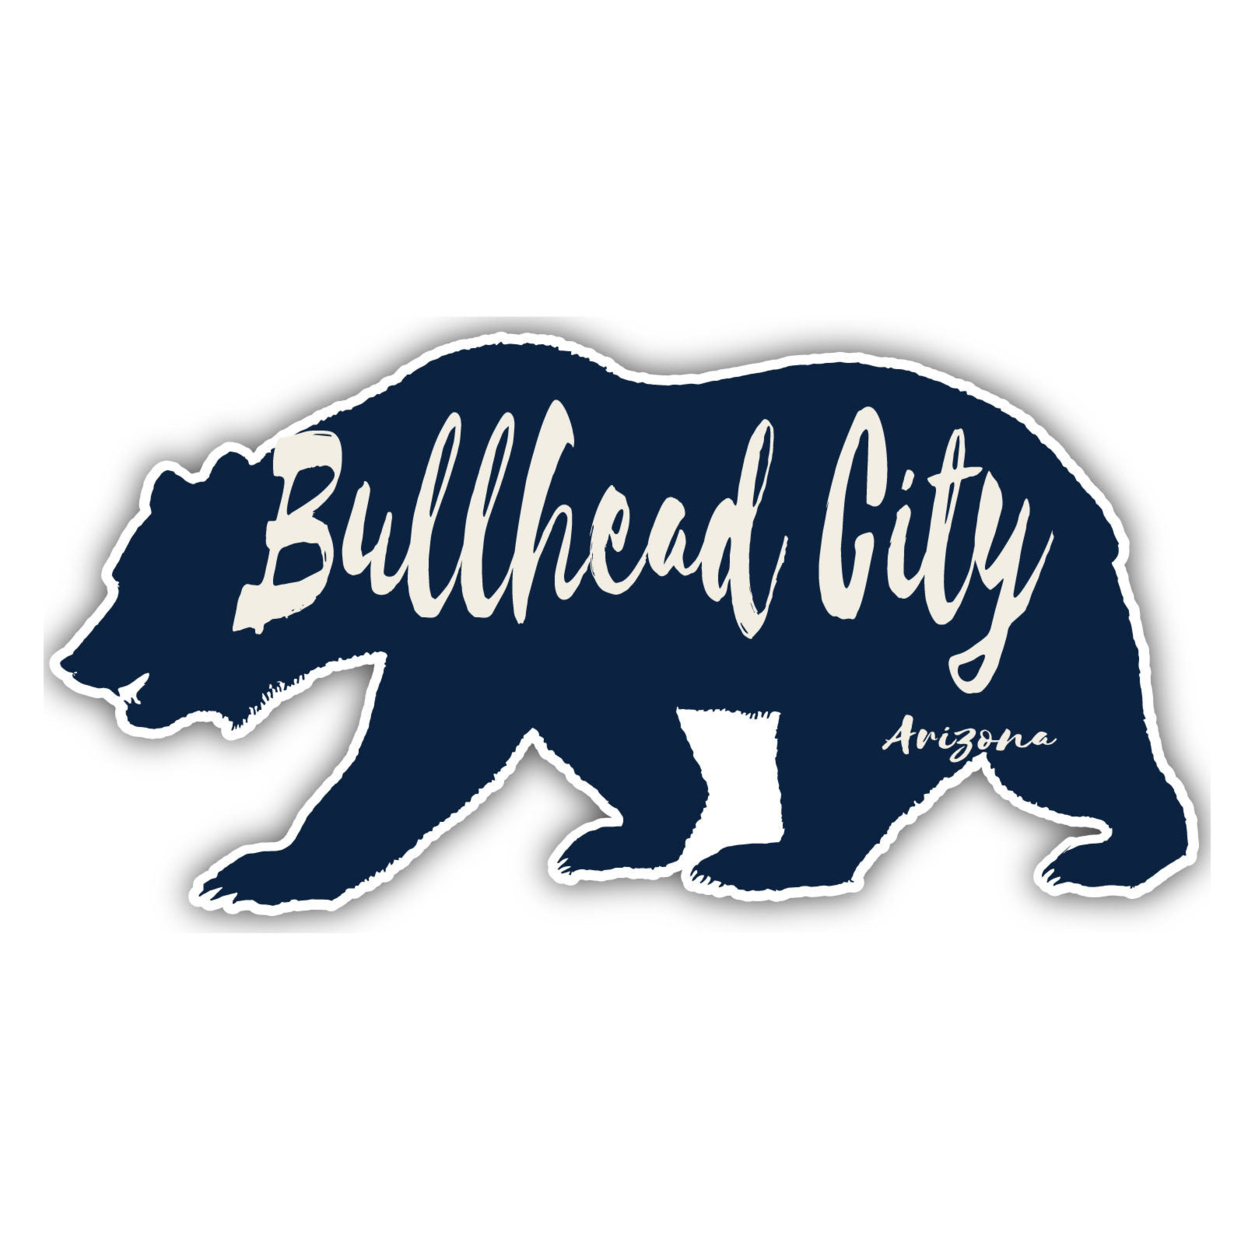 Bullhead City Arizona Souvenir Decorative Stickers (Choose Theme And Size) - Single Unit, 4-Inch, Bear